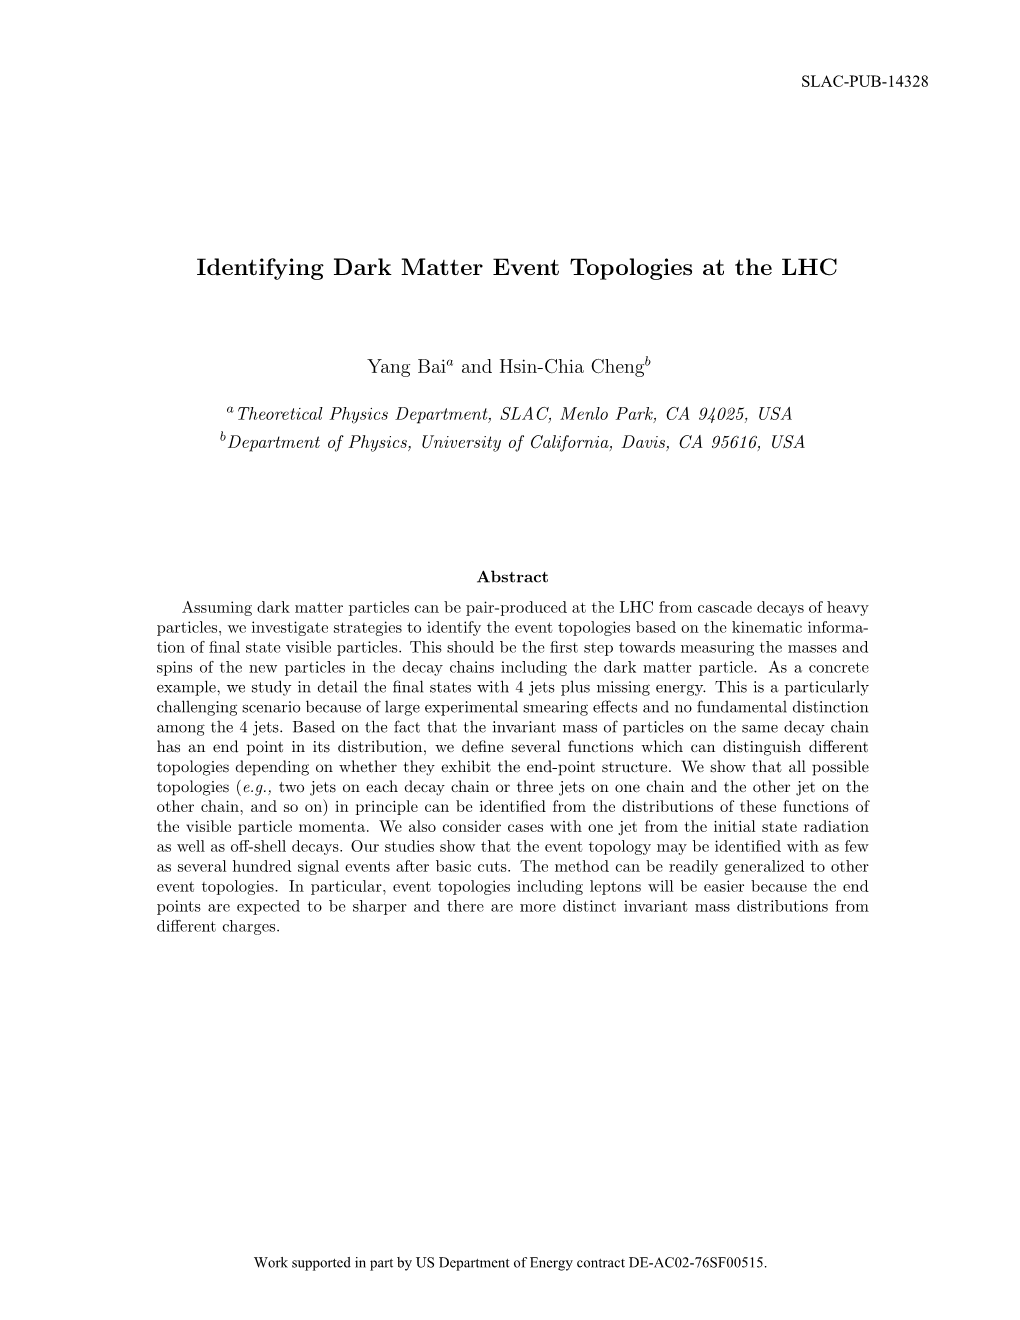 Identifying Dark Matter Event Topologies at the LHC